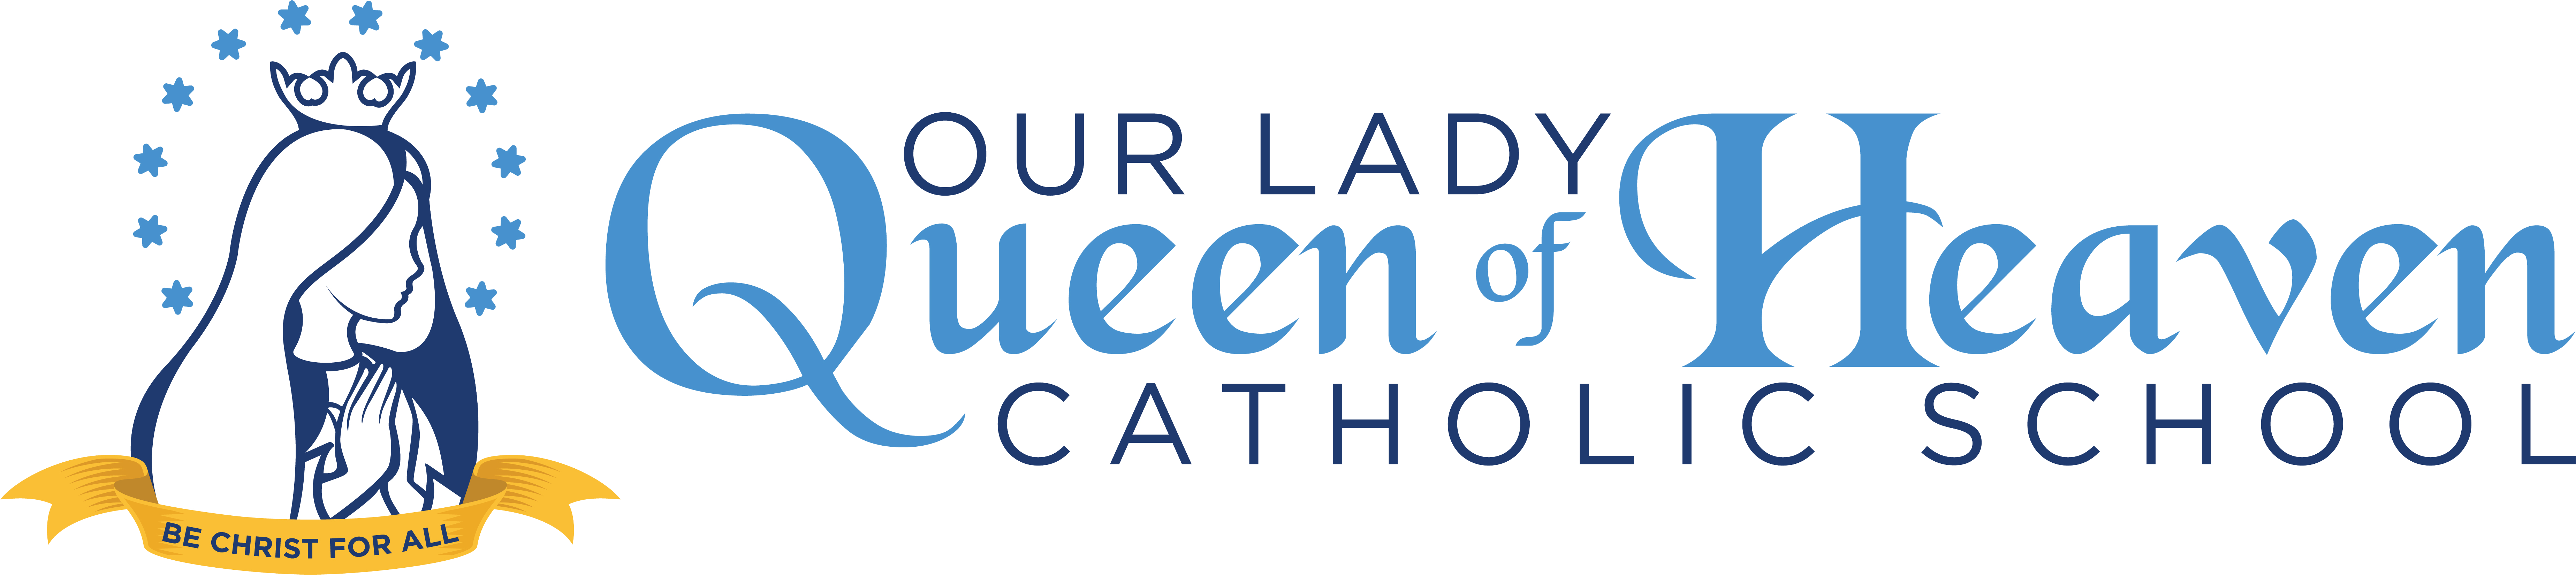 Our Lady Queen of Heaven School